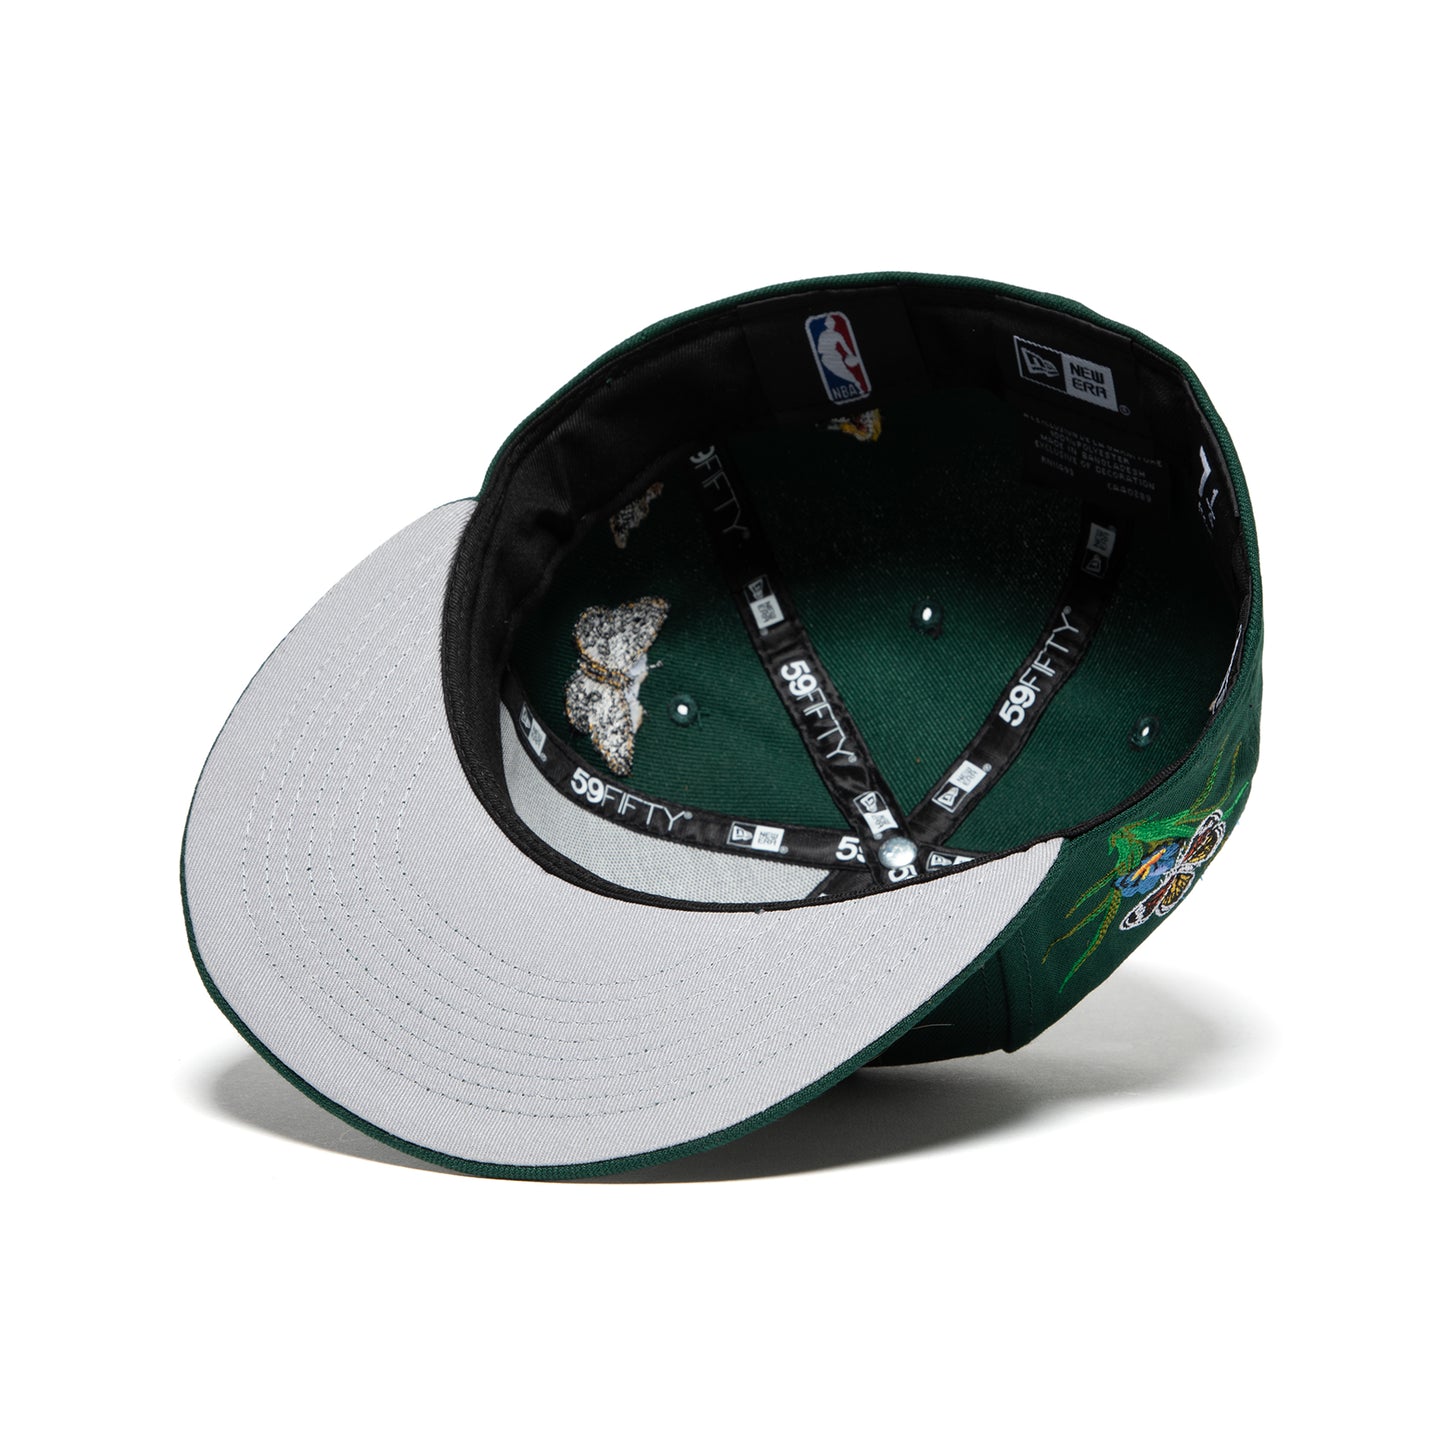 New Era Boston Celtics 59Fifty Fitted Hat (Green)